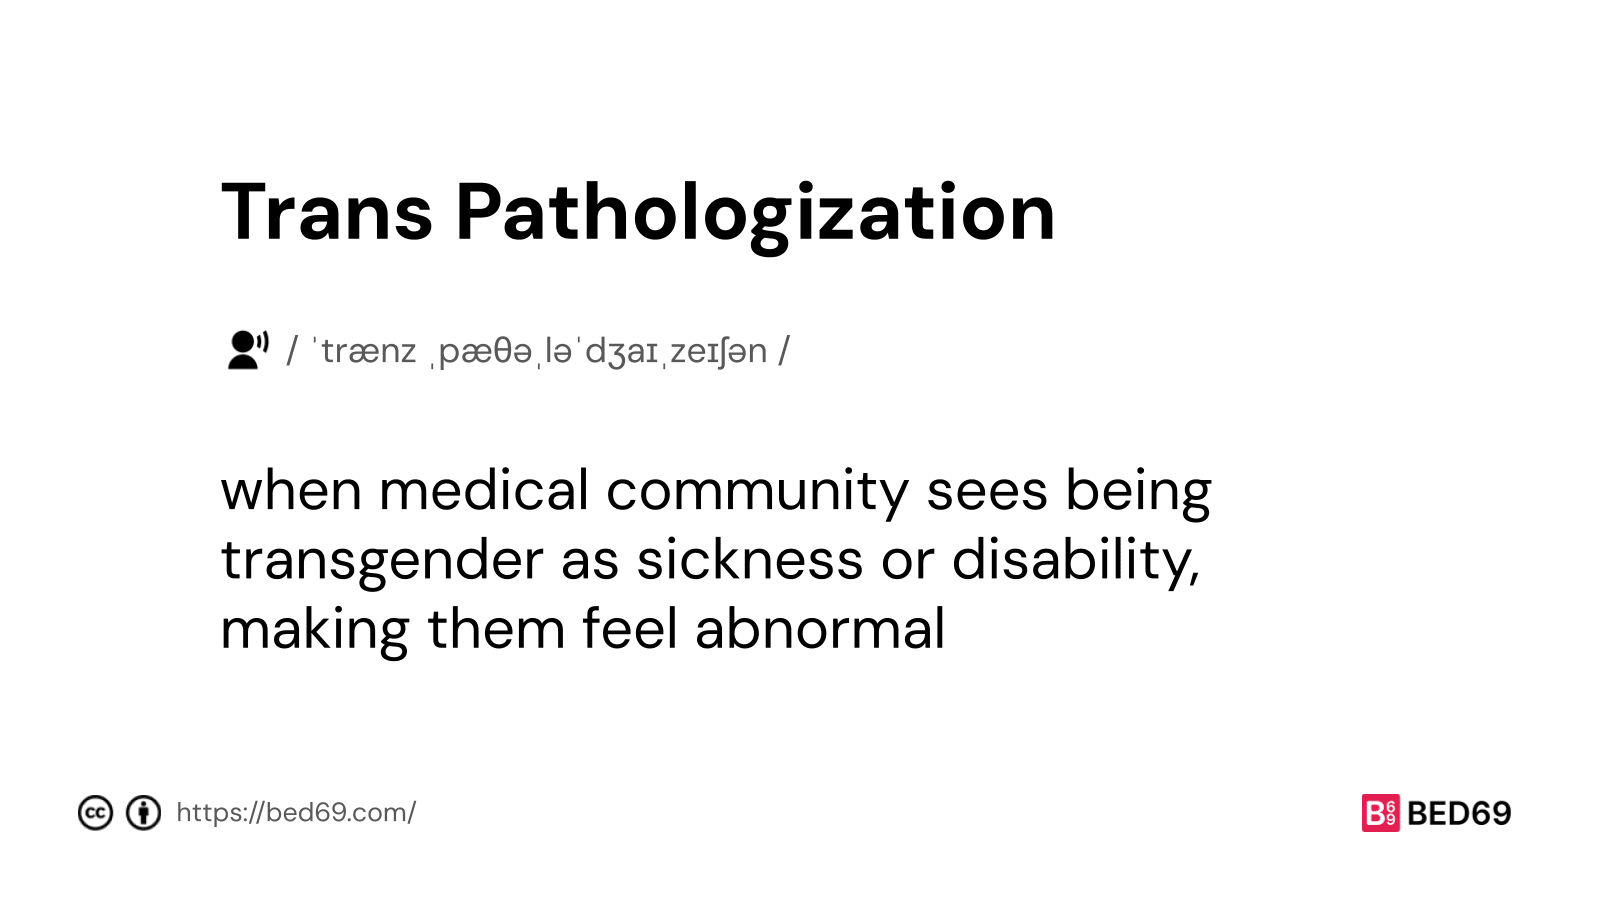 Trans Pathologization - Word Definition